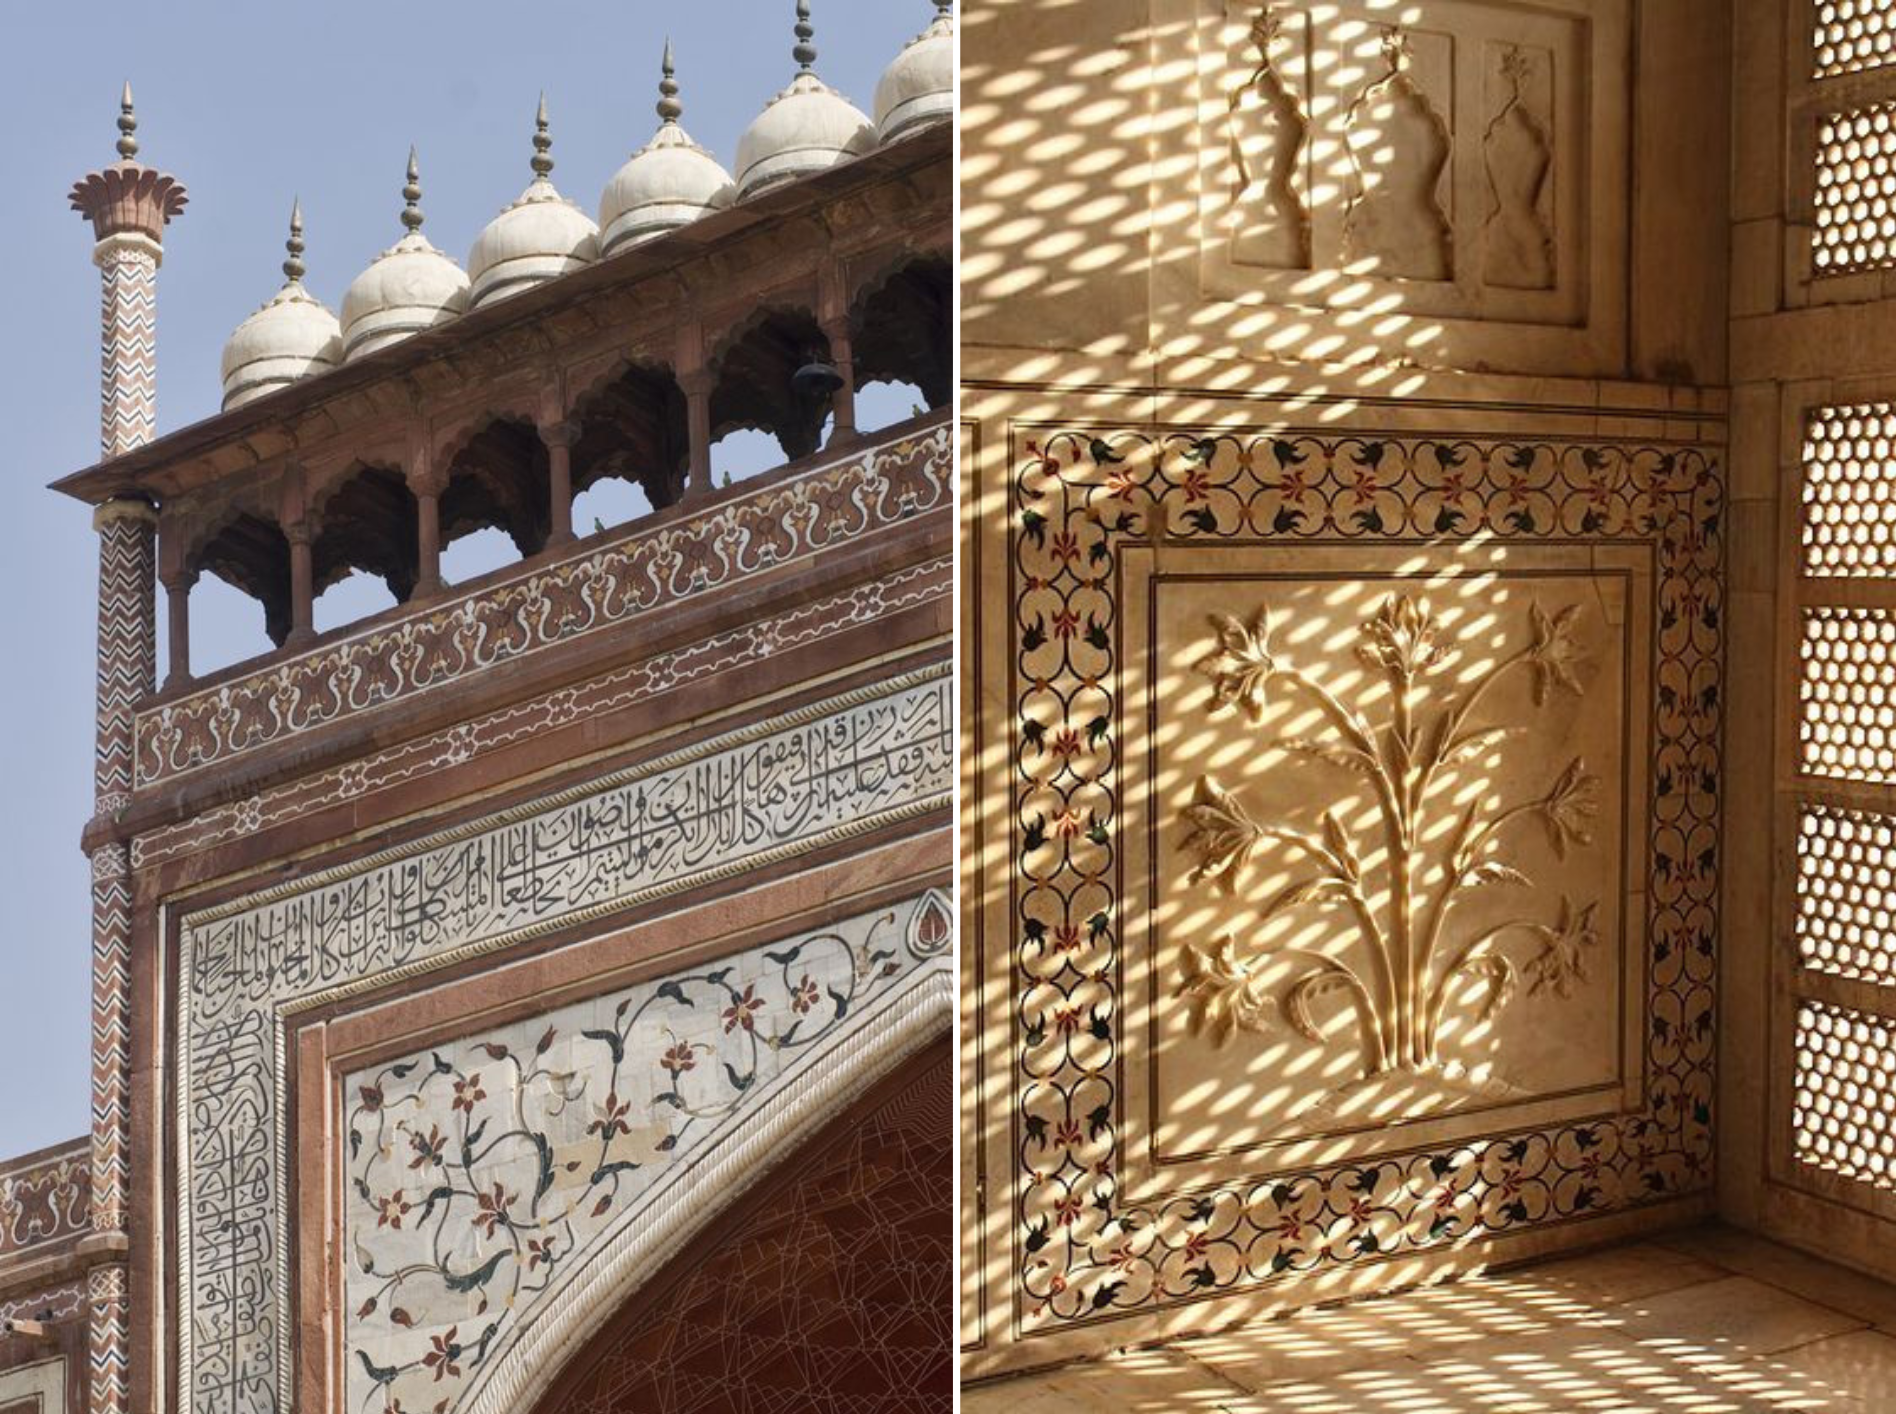 The inlaid walls of the Taj Mahal in India